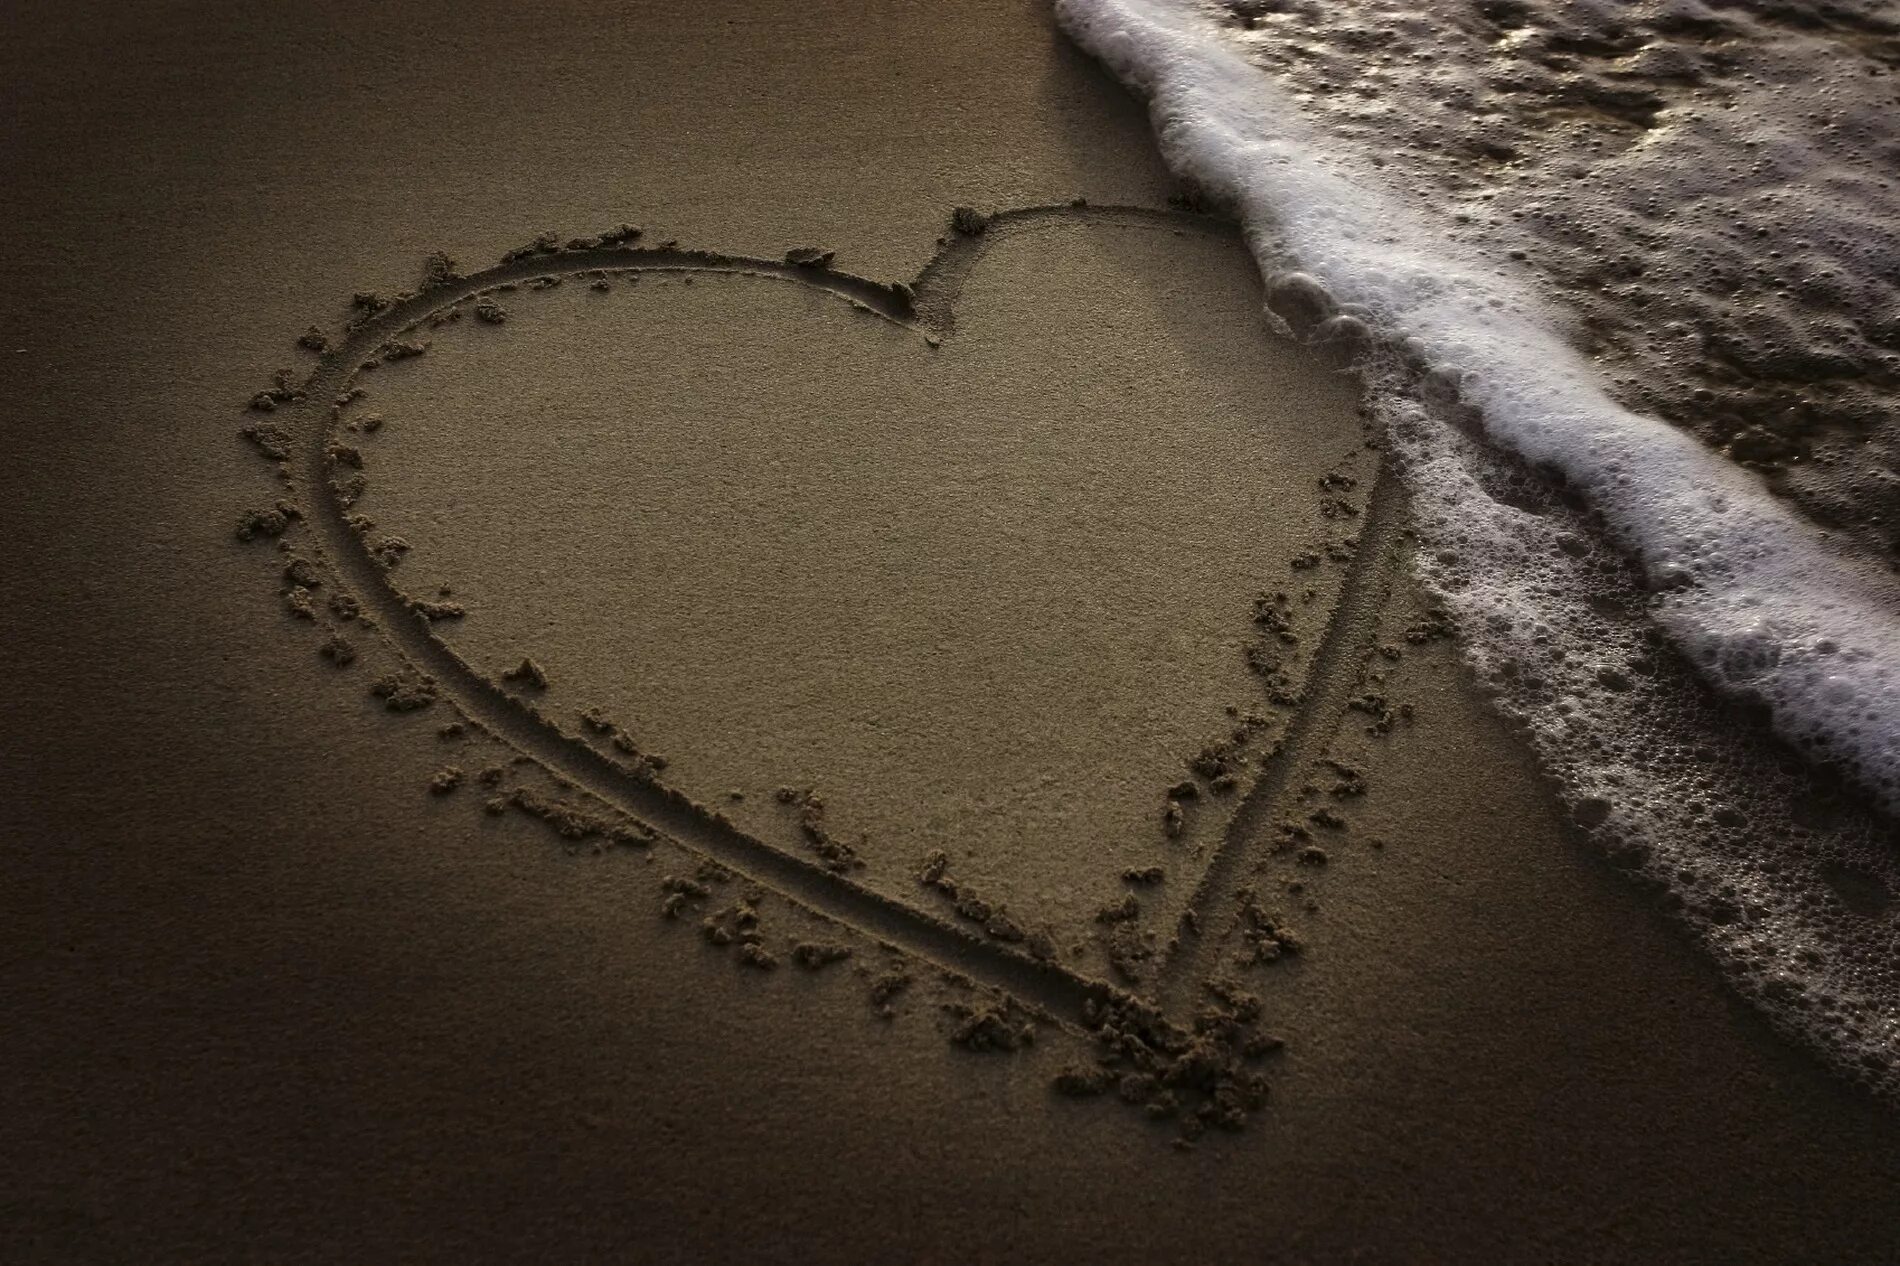 Сердце на песке. Сердечко на песке. Сердце на берегу моря. Романтические надписи на песке.